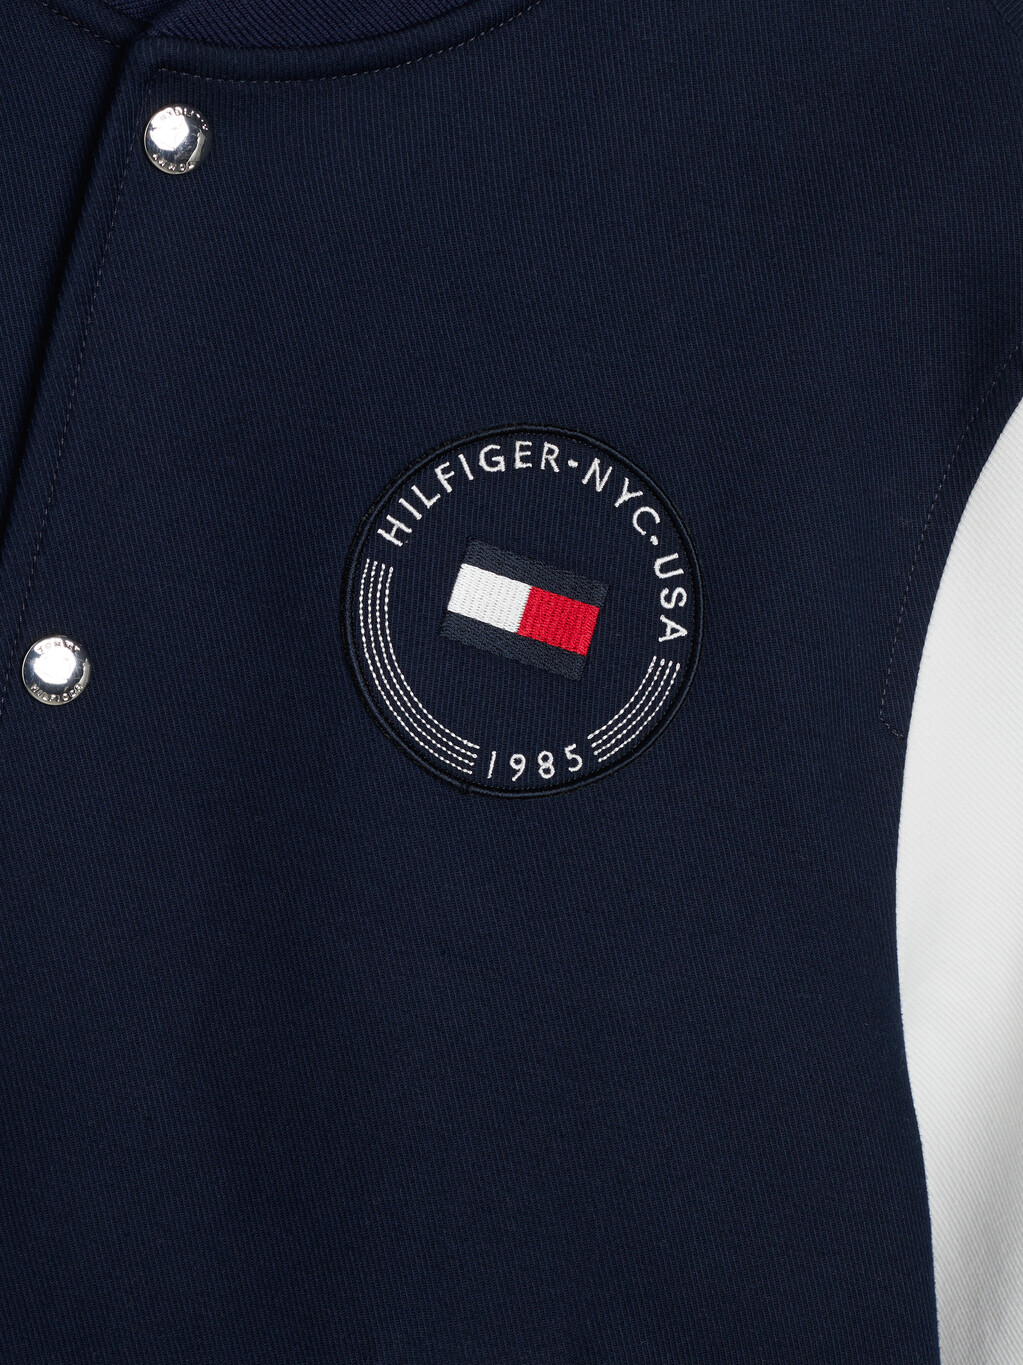 Hilfiger Team Flag Varsity Jacket, Desert Sky/Multi, hi-res